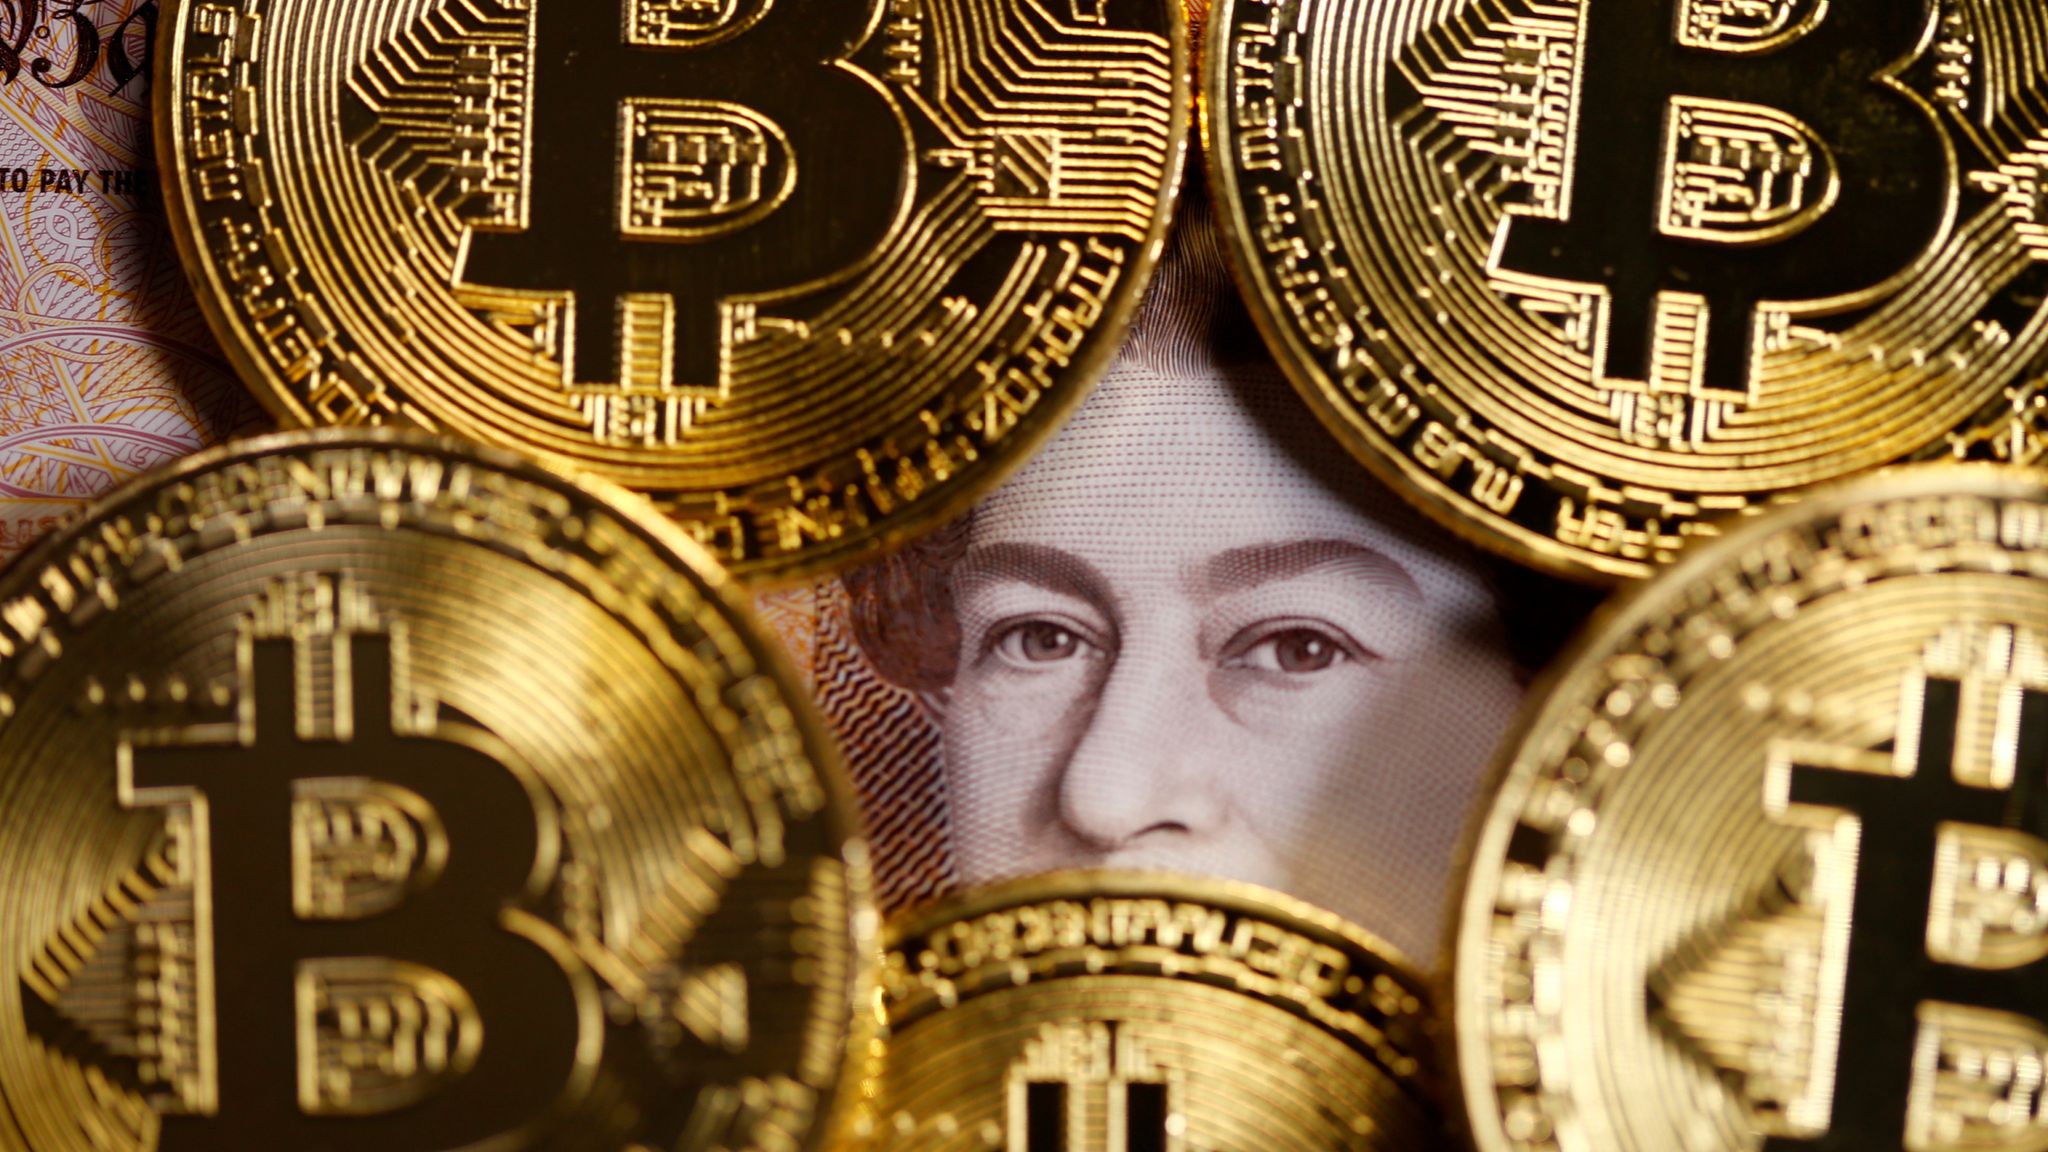 0.0026 bitcoins as pounds